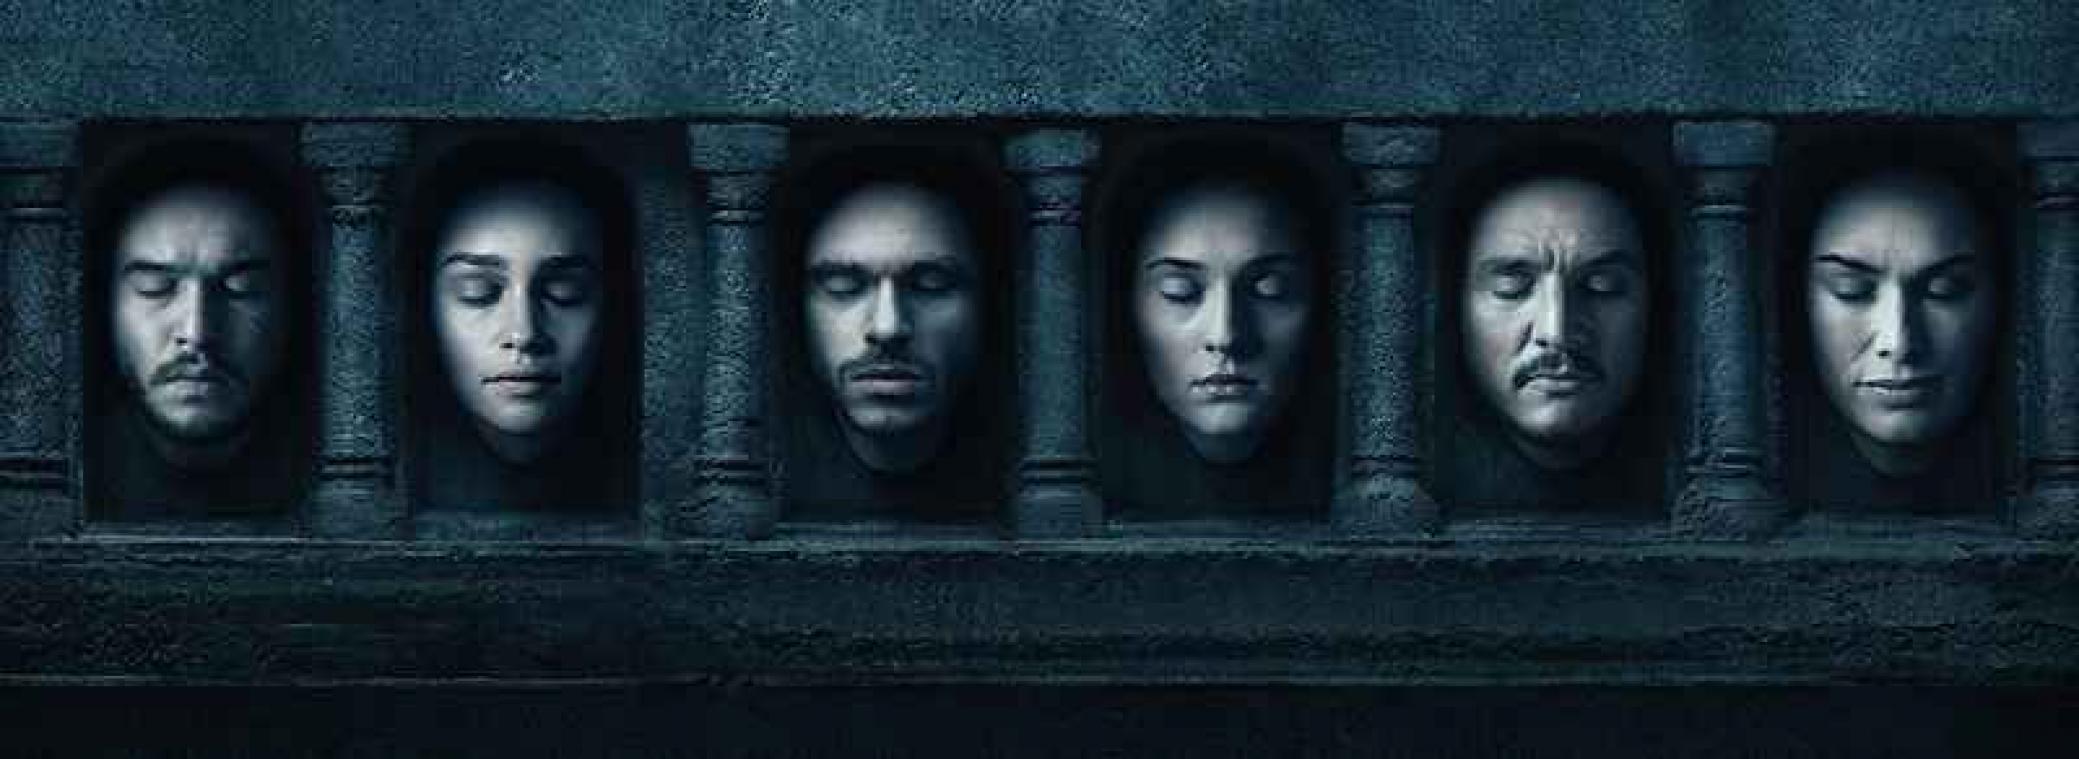 'Game of Thrones' is weer meest illegaal gedownloade serie